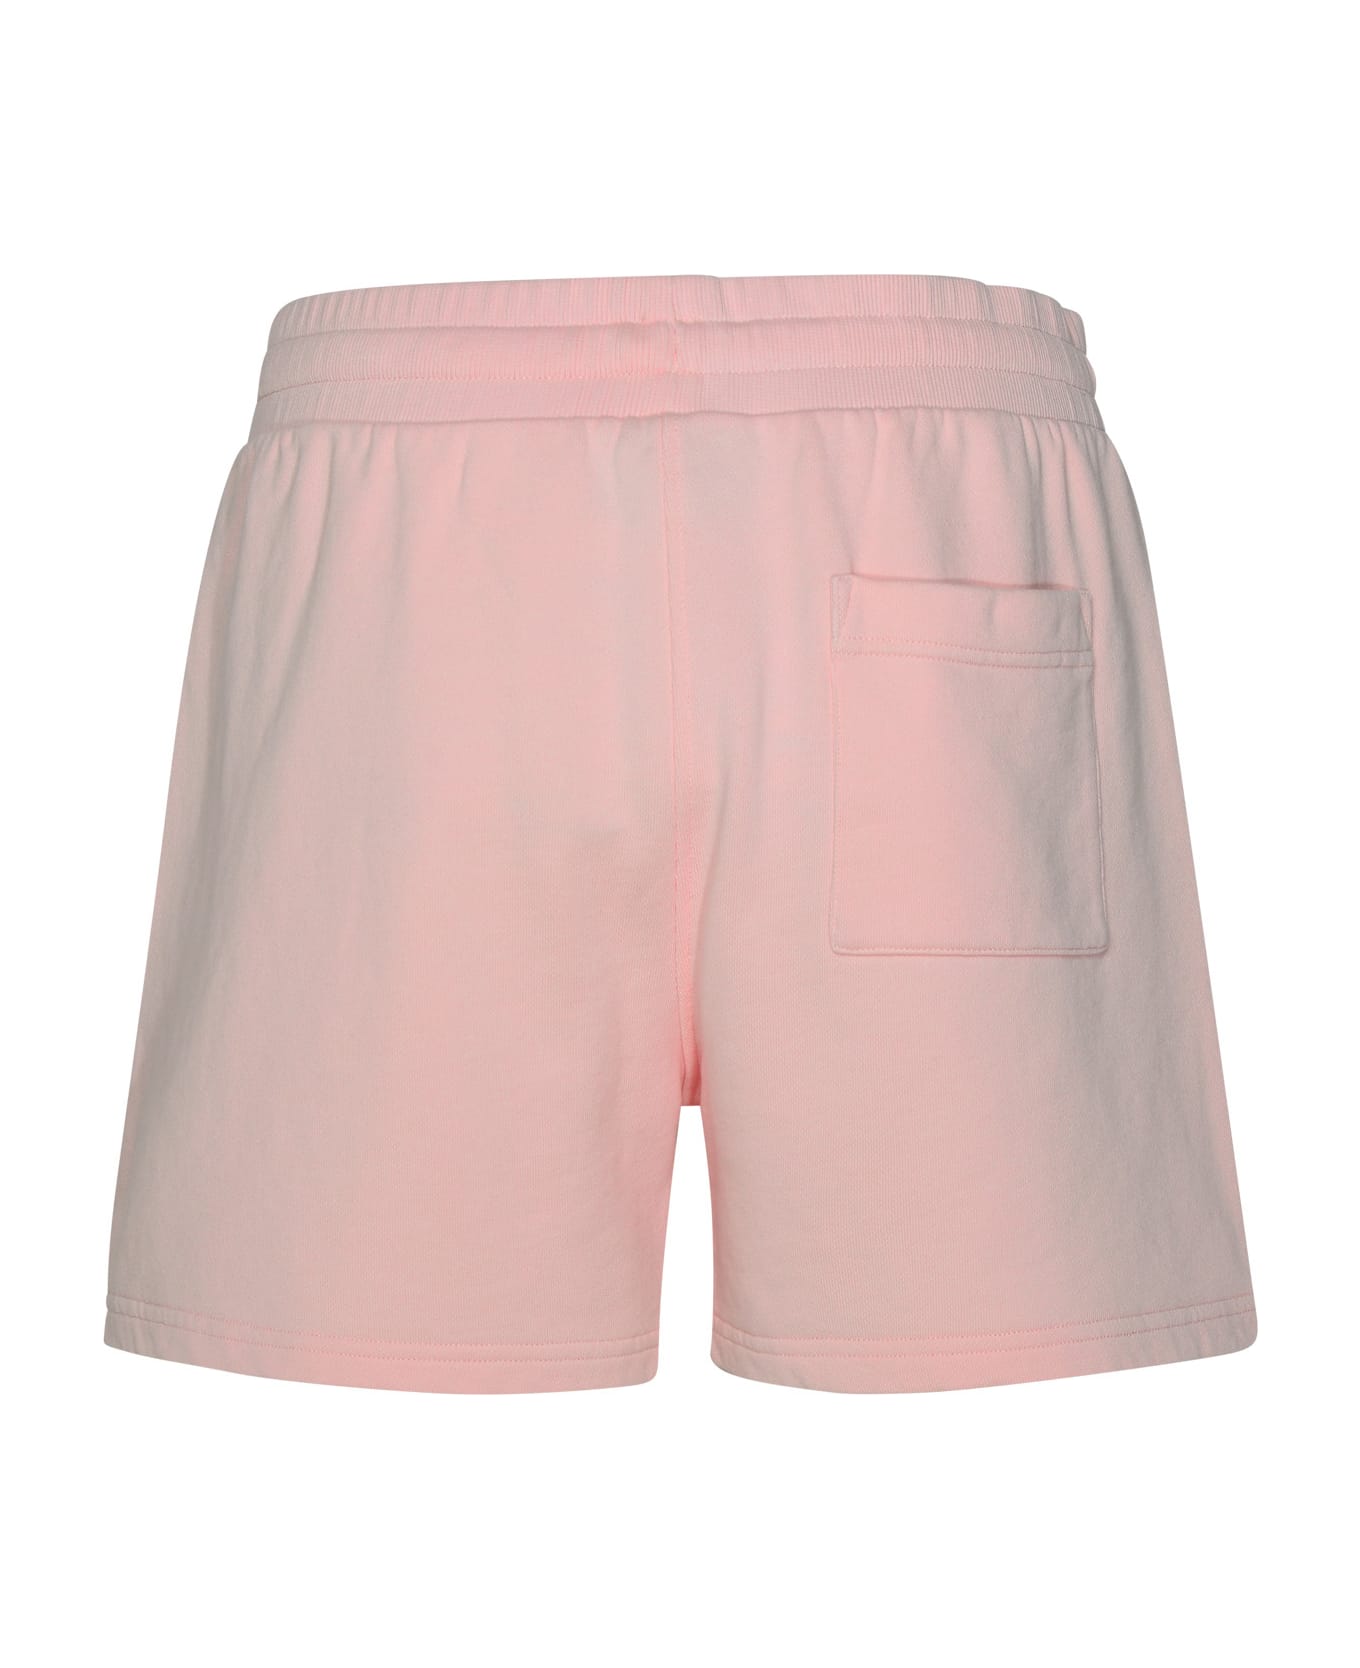 Casablanca 'equipement Sportif' Pink Organic Cotton Shorts - Pink